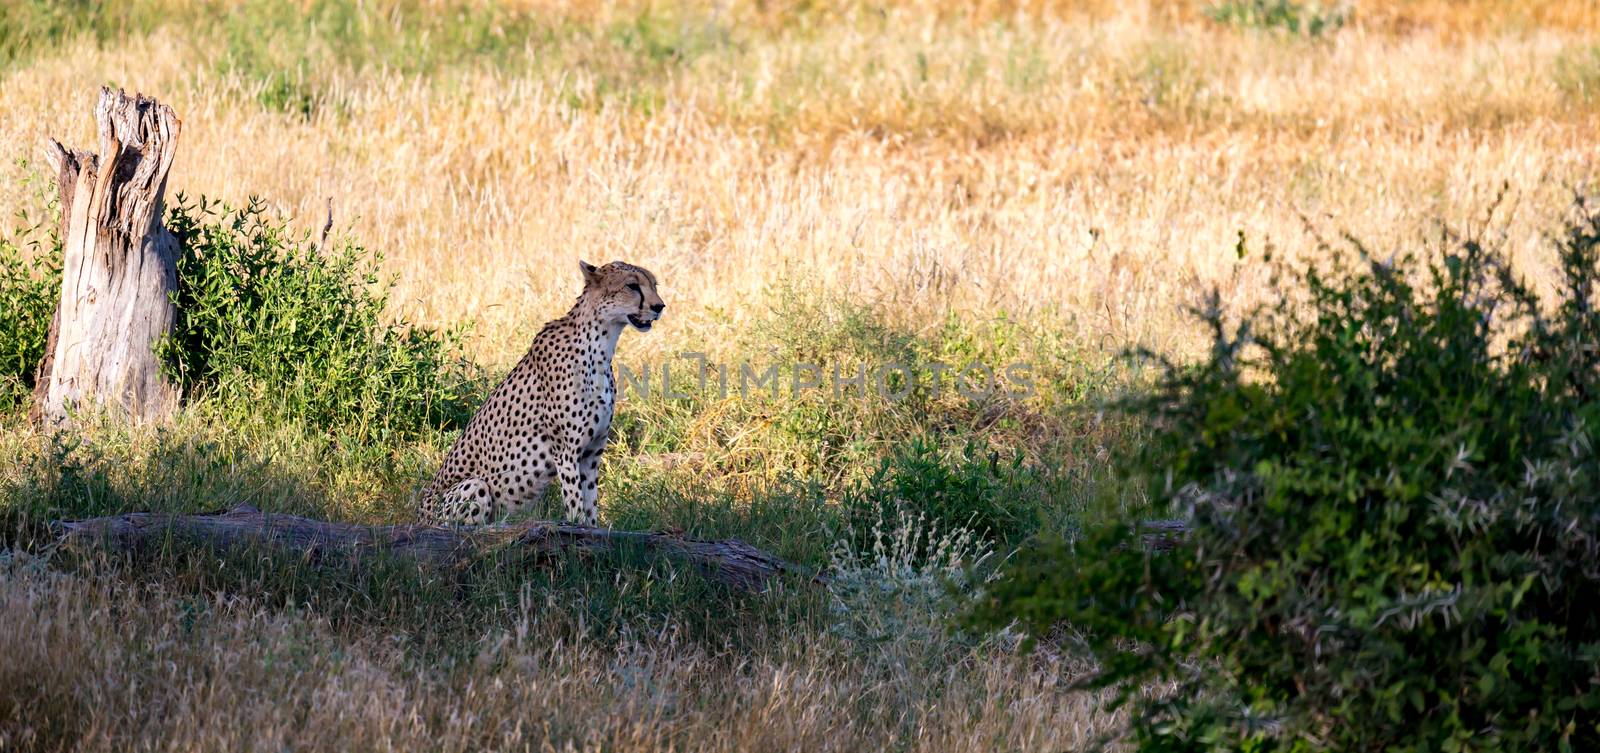 A Cheetah in the grassland of the savannah in Kenya